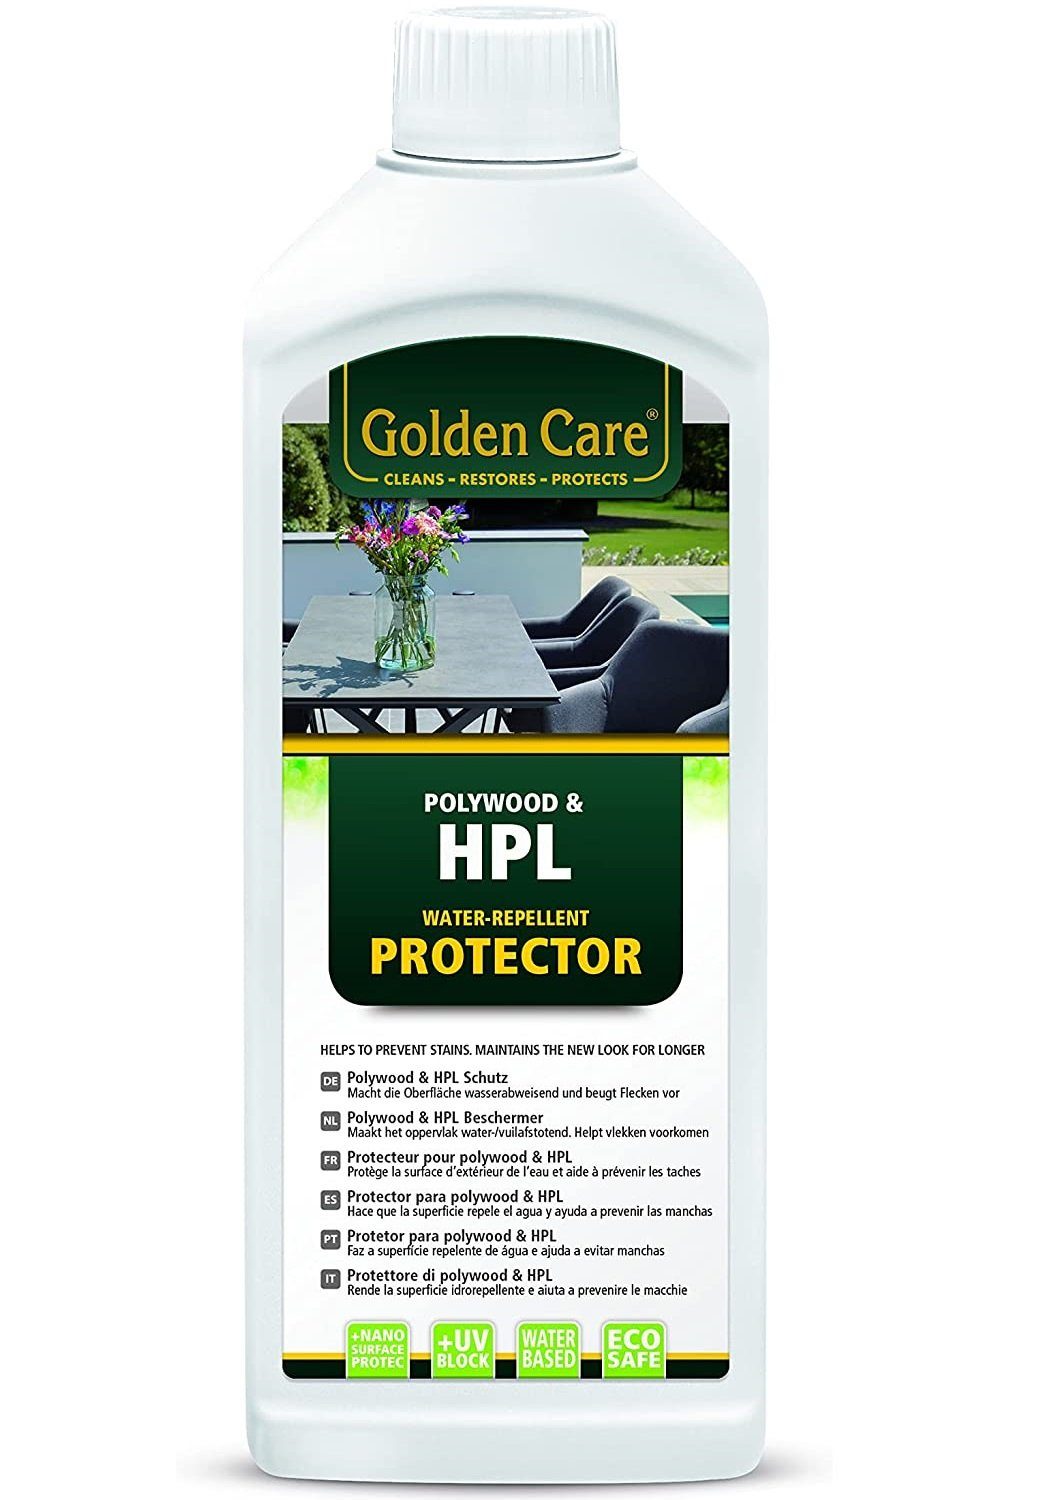 Golden Care Holzöl Protector für HPL & Polywood 500 ml Transparent